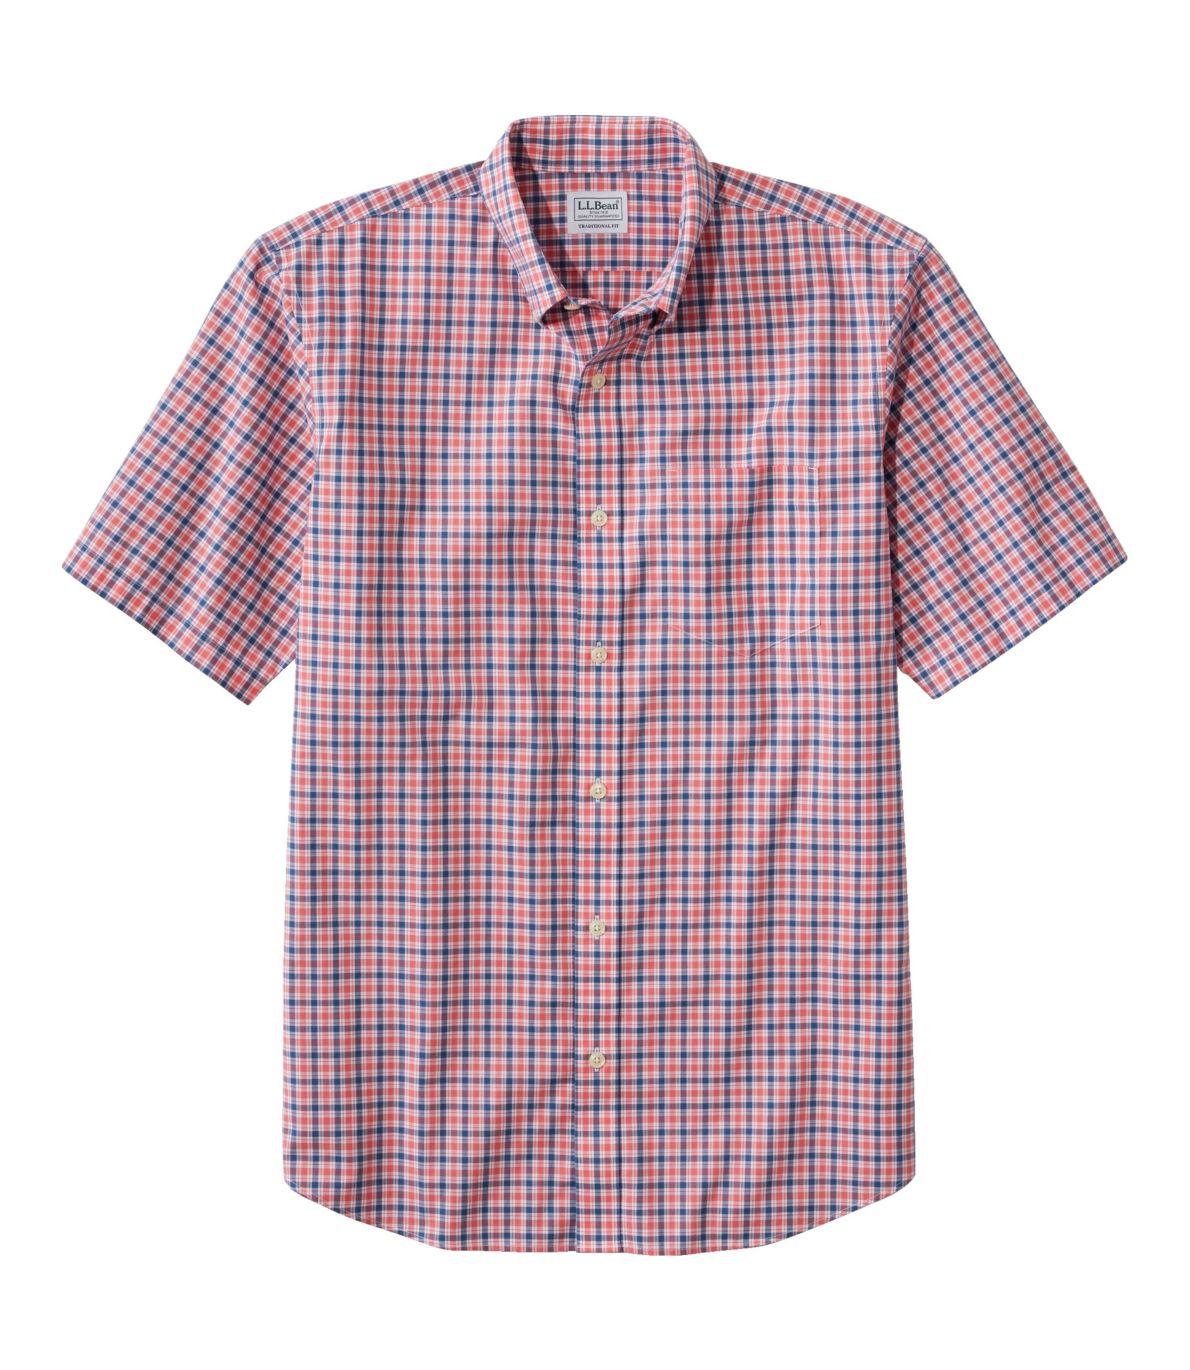 Men's Wrinkle-Free Kennebunk Sport Shirt, Traditional Fit Short-Sleeve Check